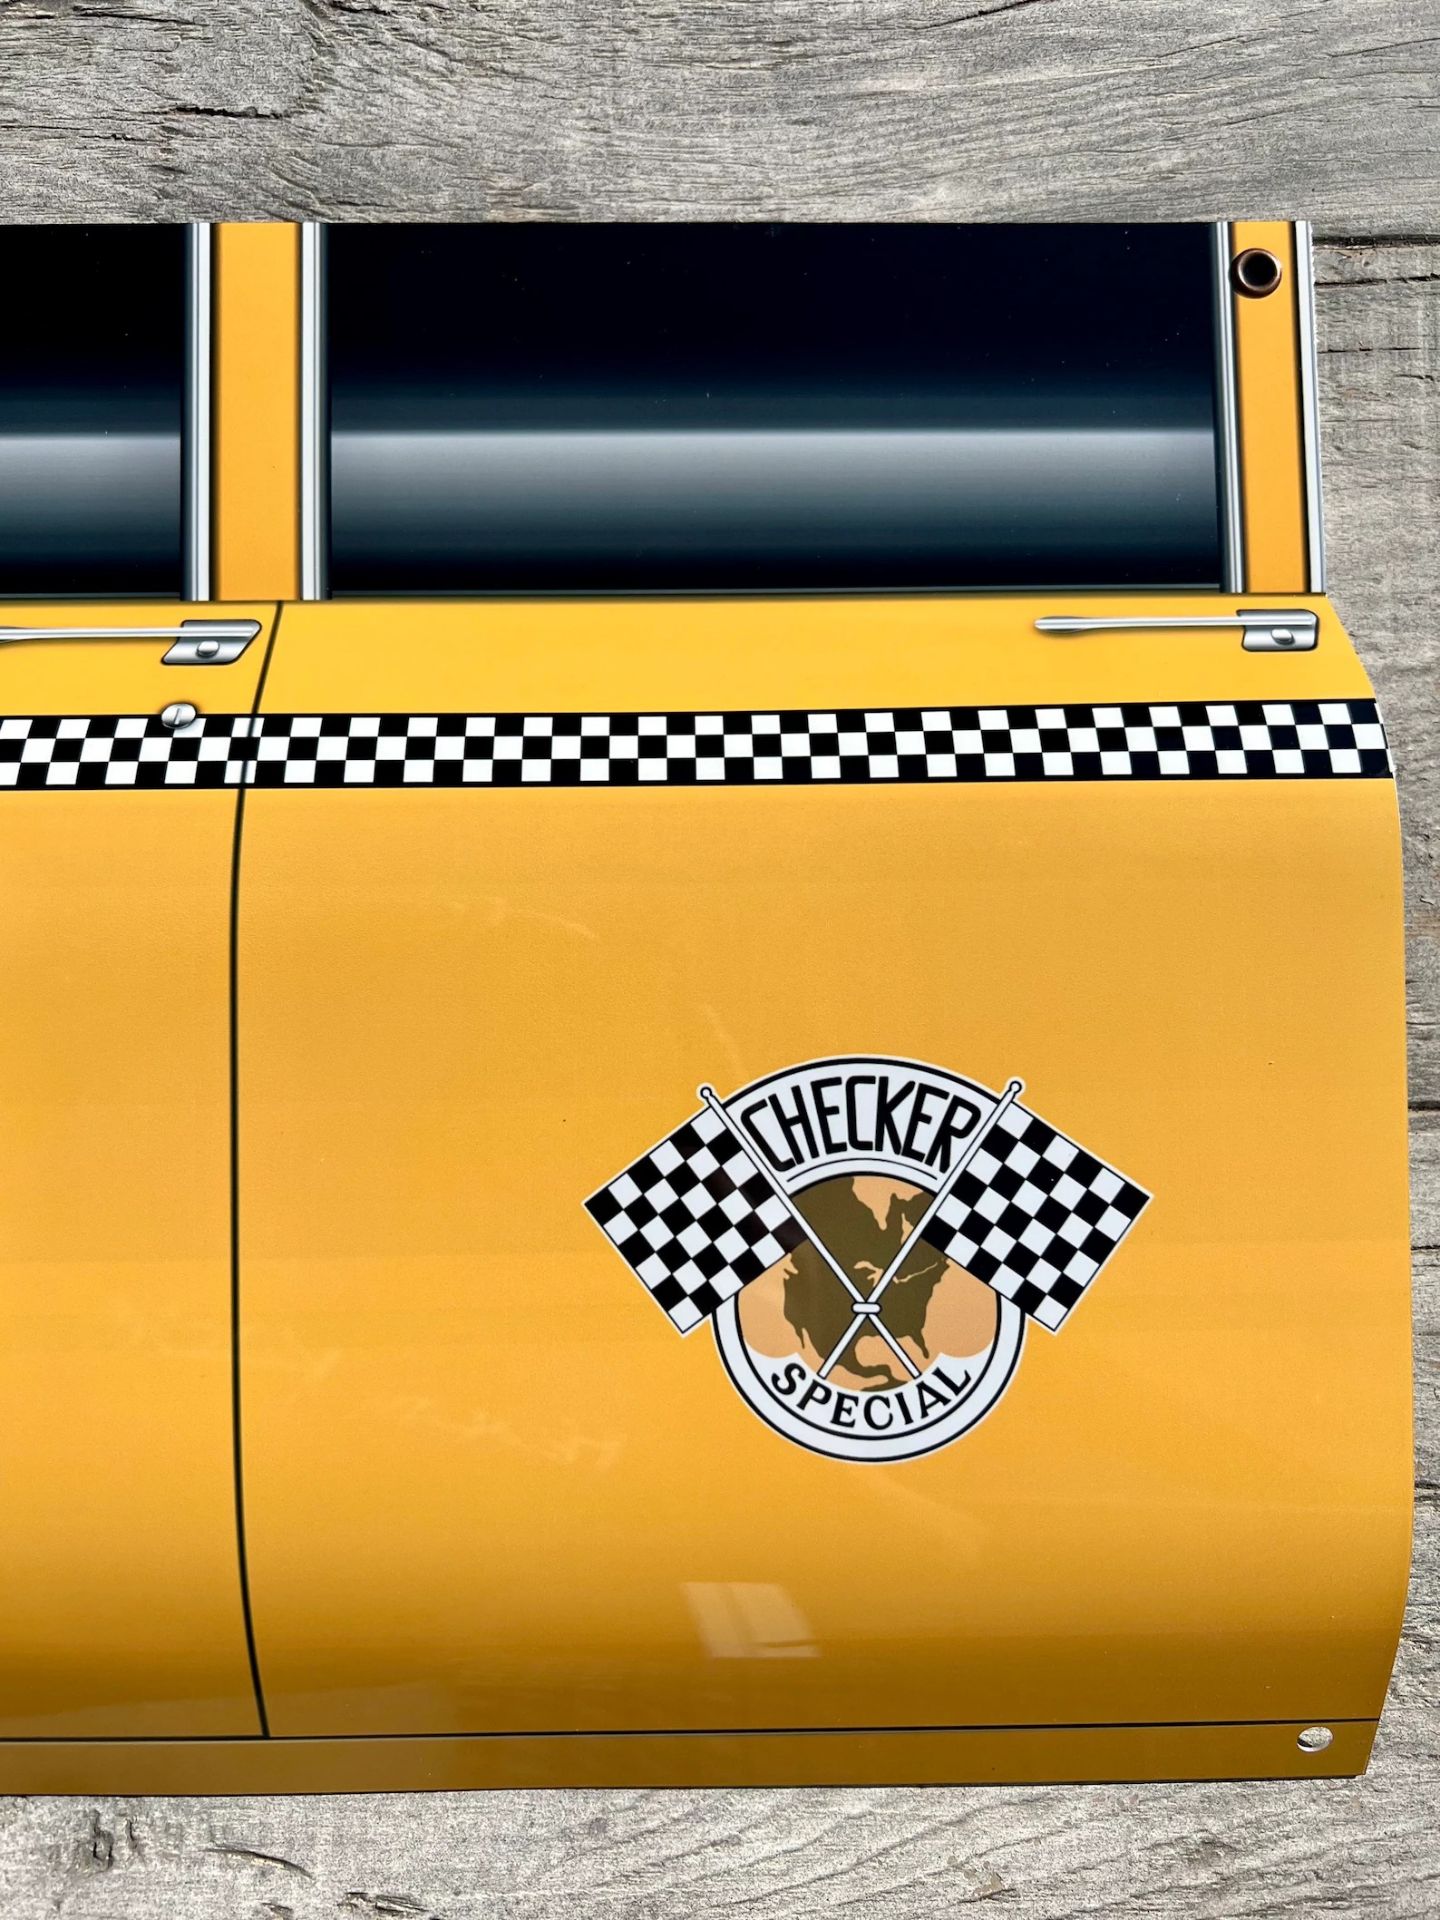 Checkers Cab Wall Display - Image 2 of 5